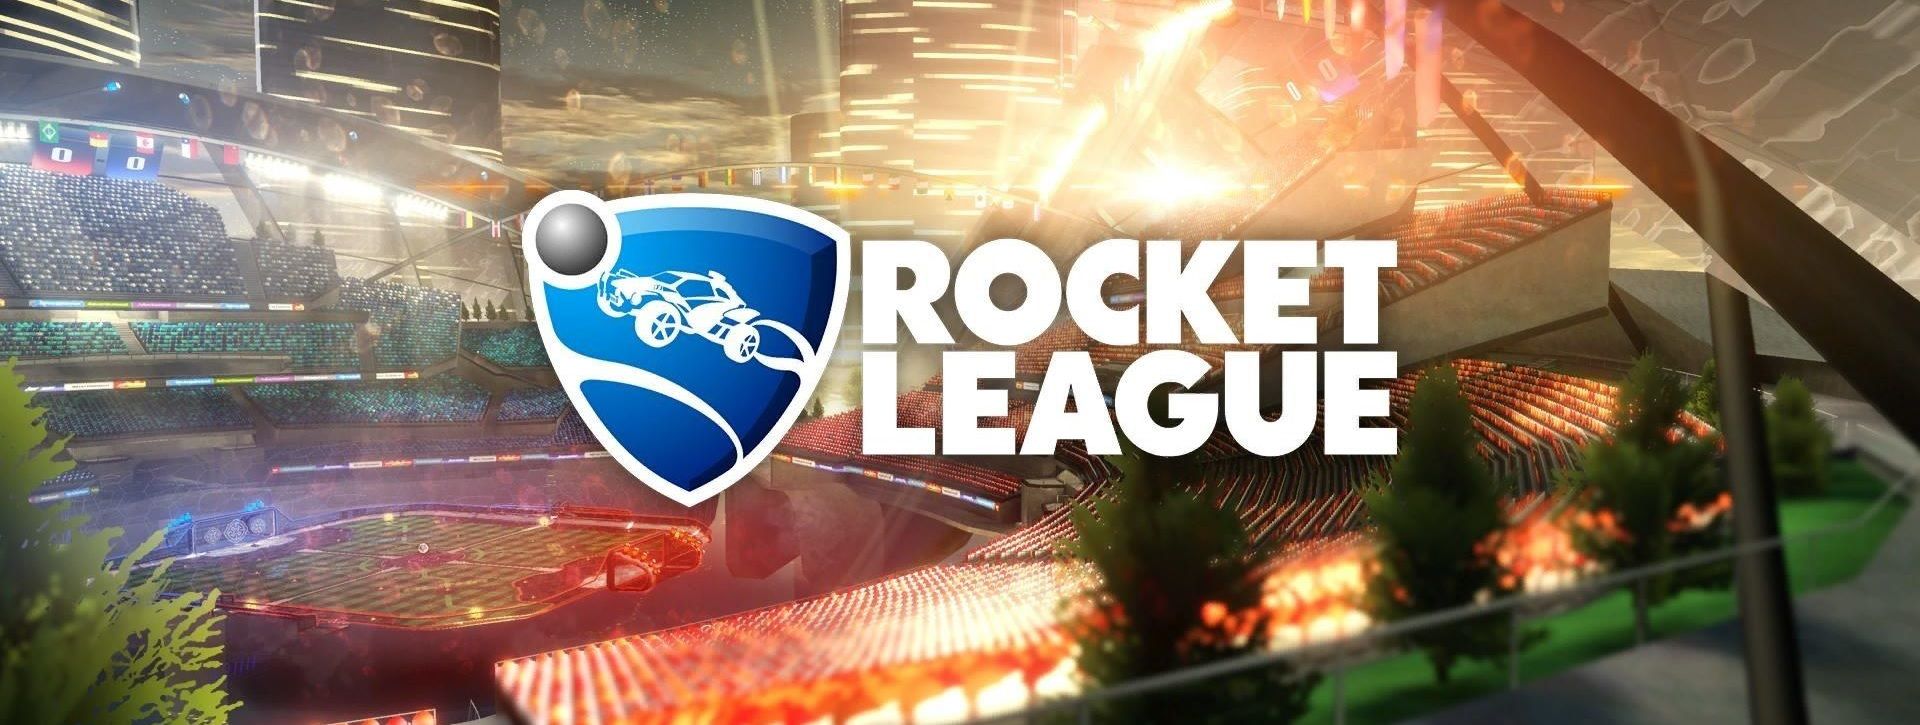 rocket-league-patch-banner.jpg